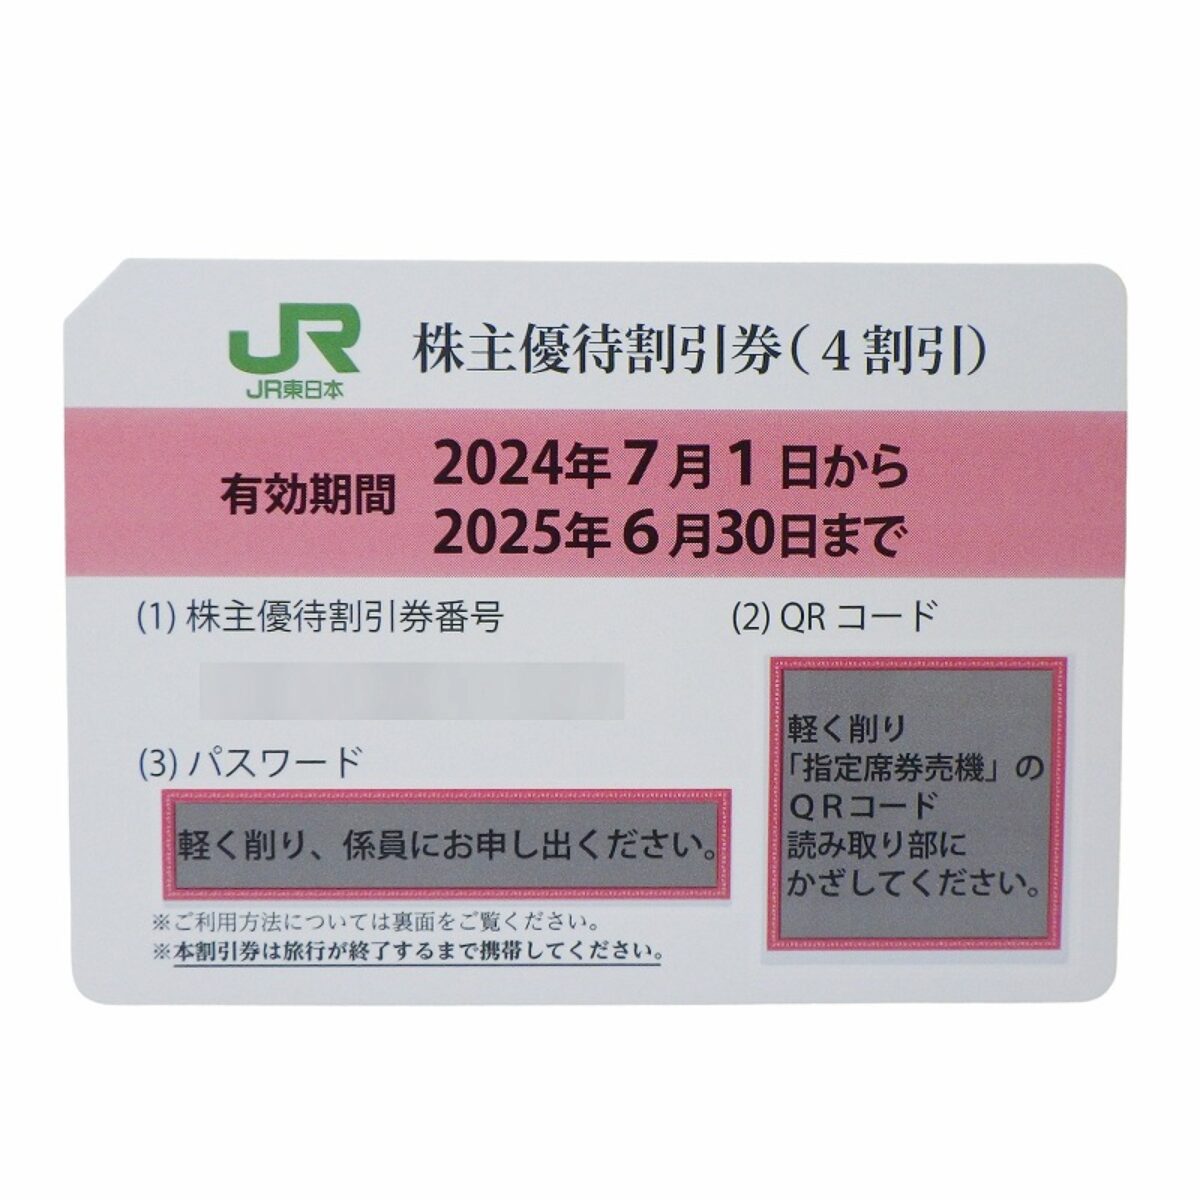 JR東日本株主優待券2024年7月1日から2025年6月30日_1_blur